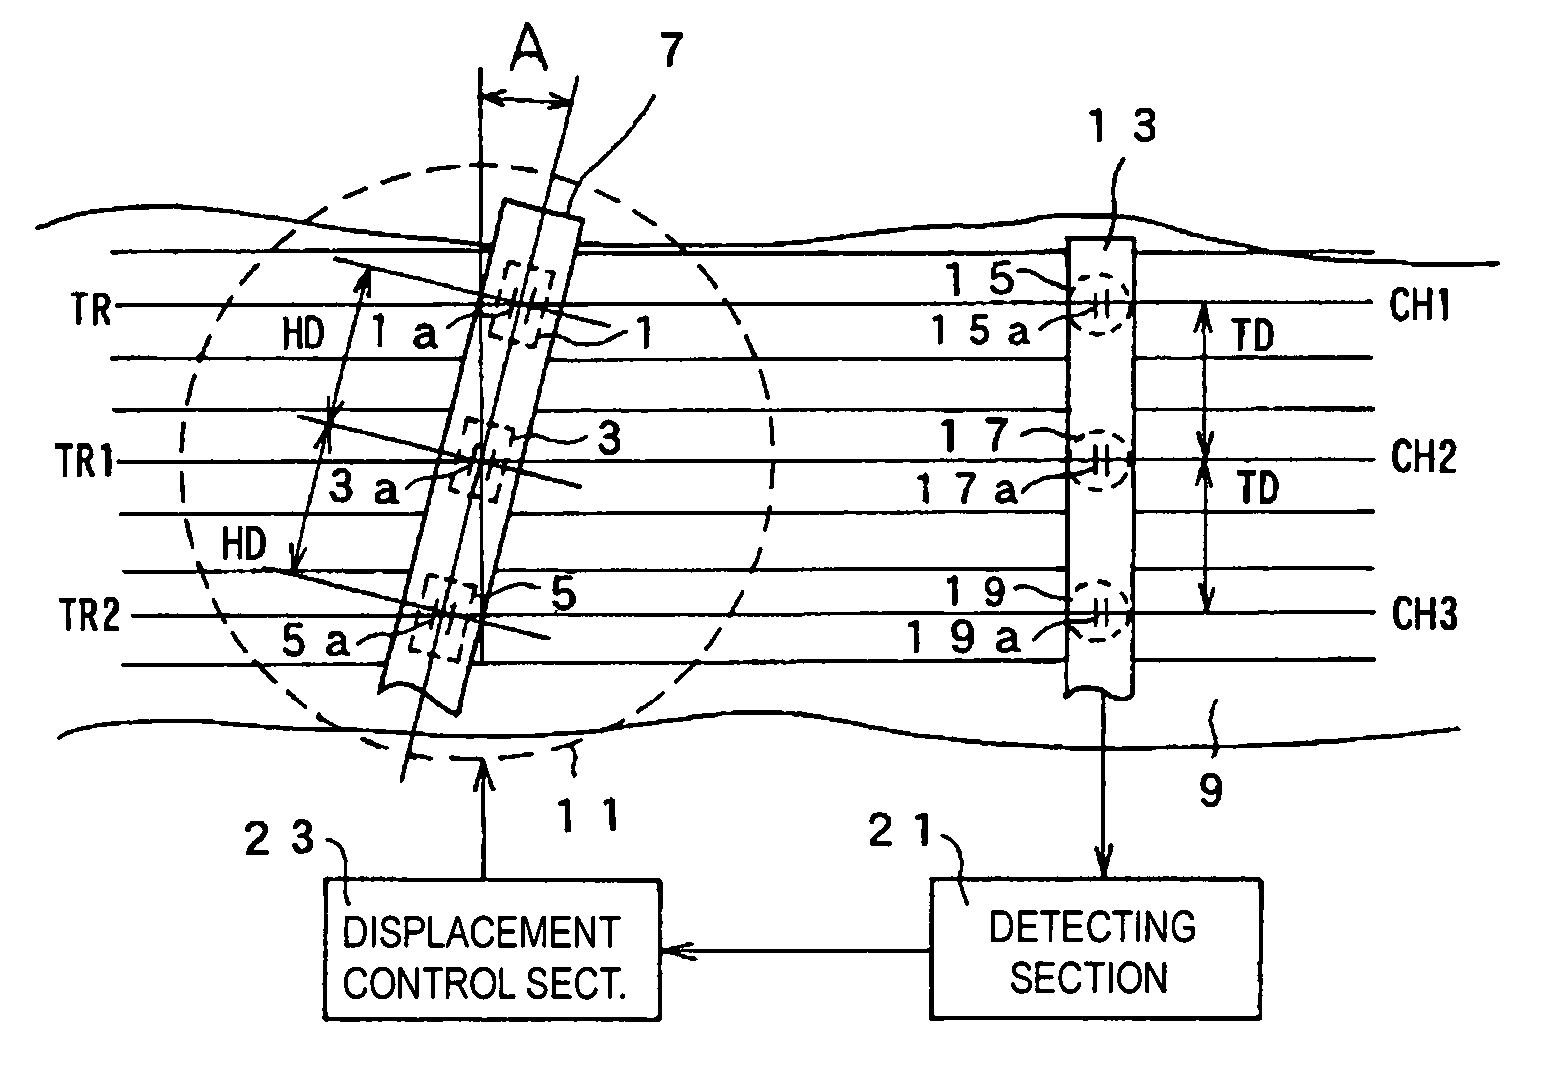 Multi-channel head position controlling apparatus and method of controlling position of multi-channel head